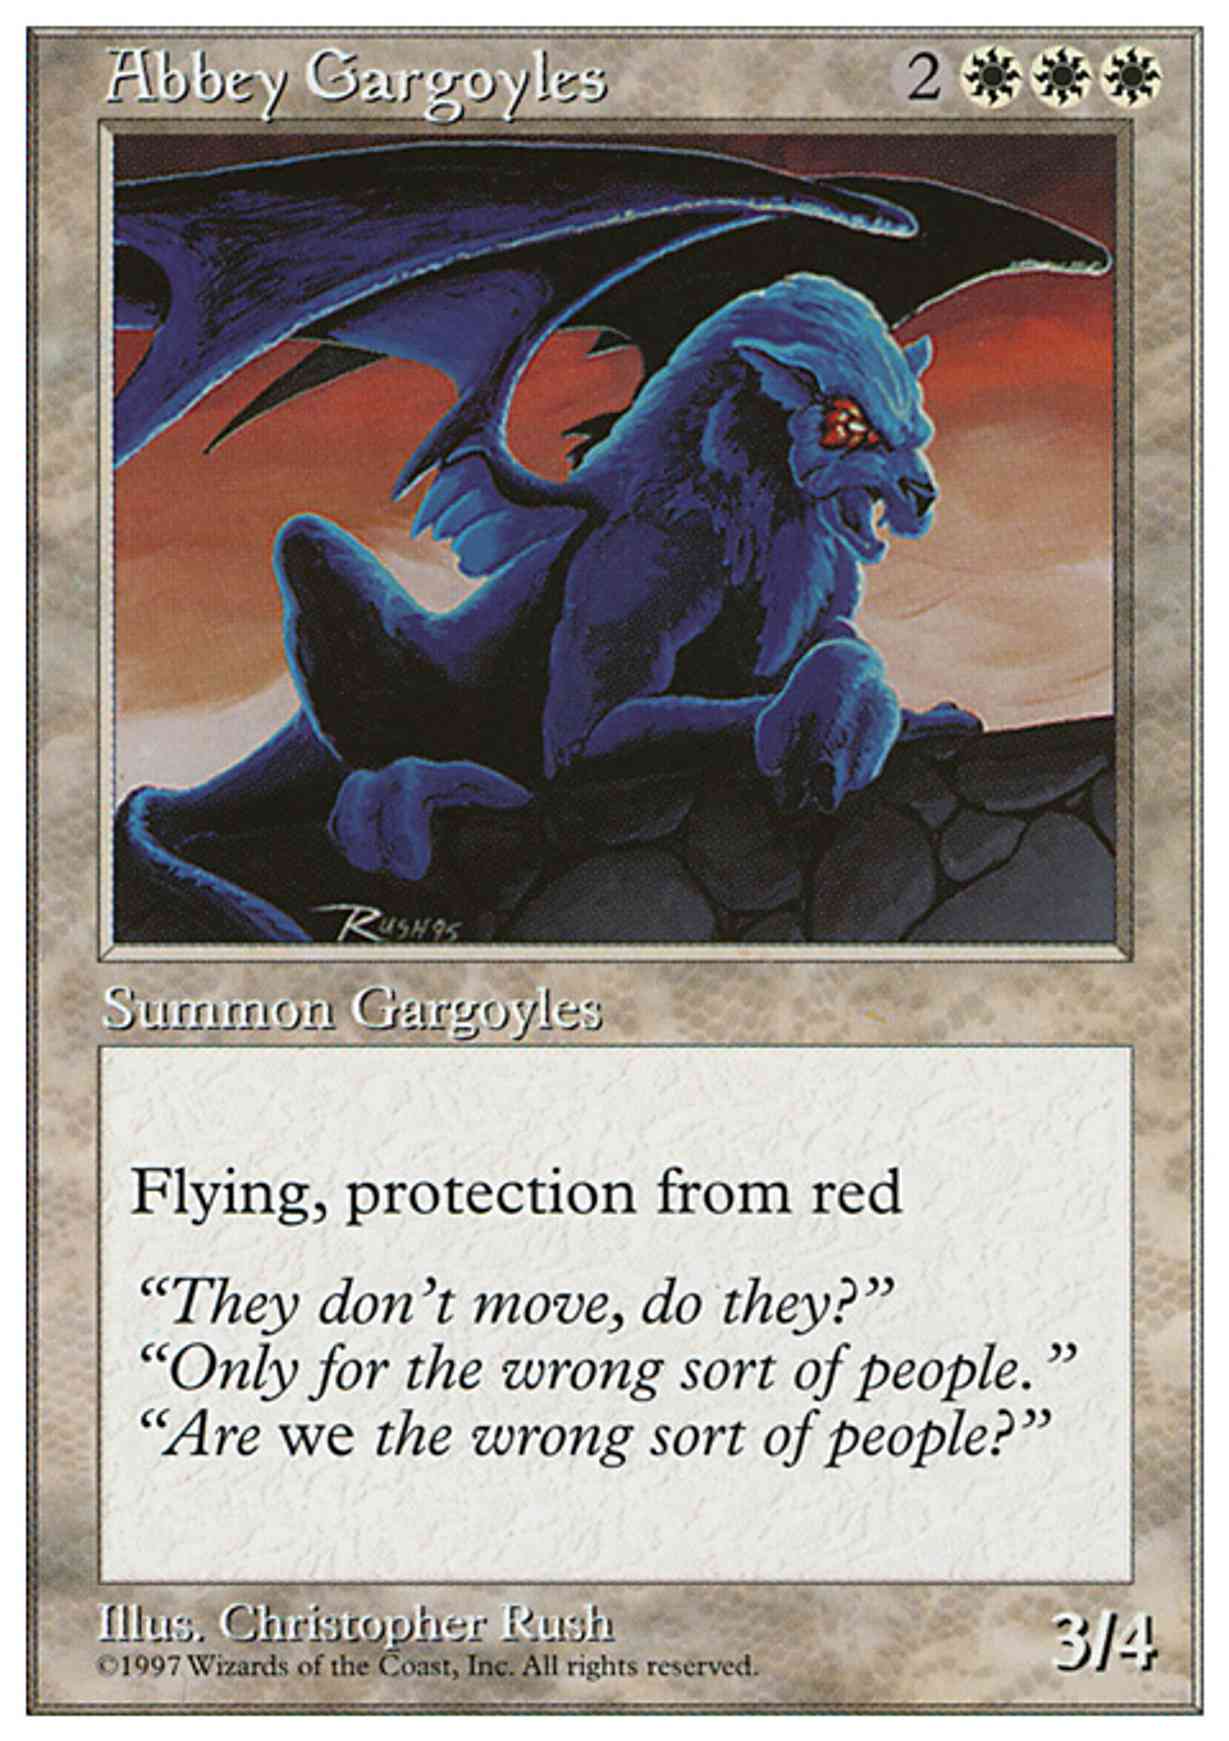 Abbey Gargoyles magic card front